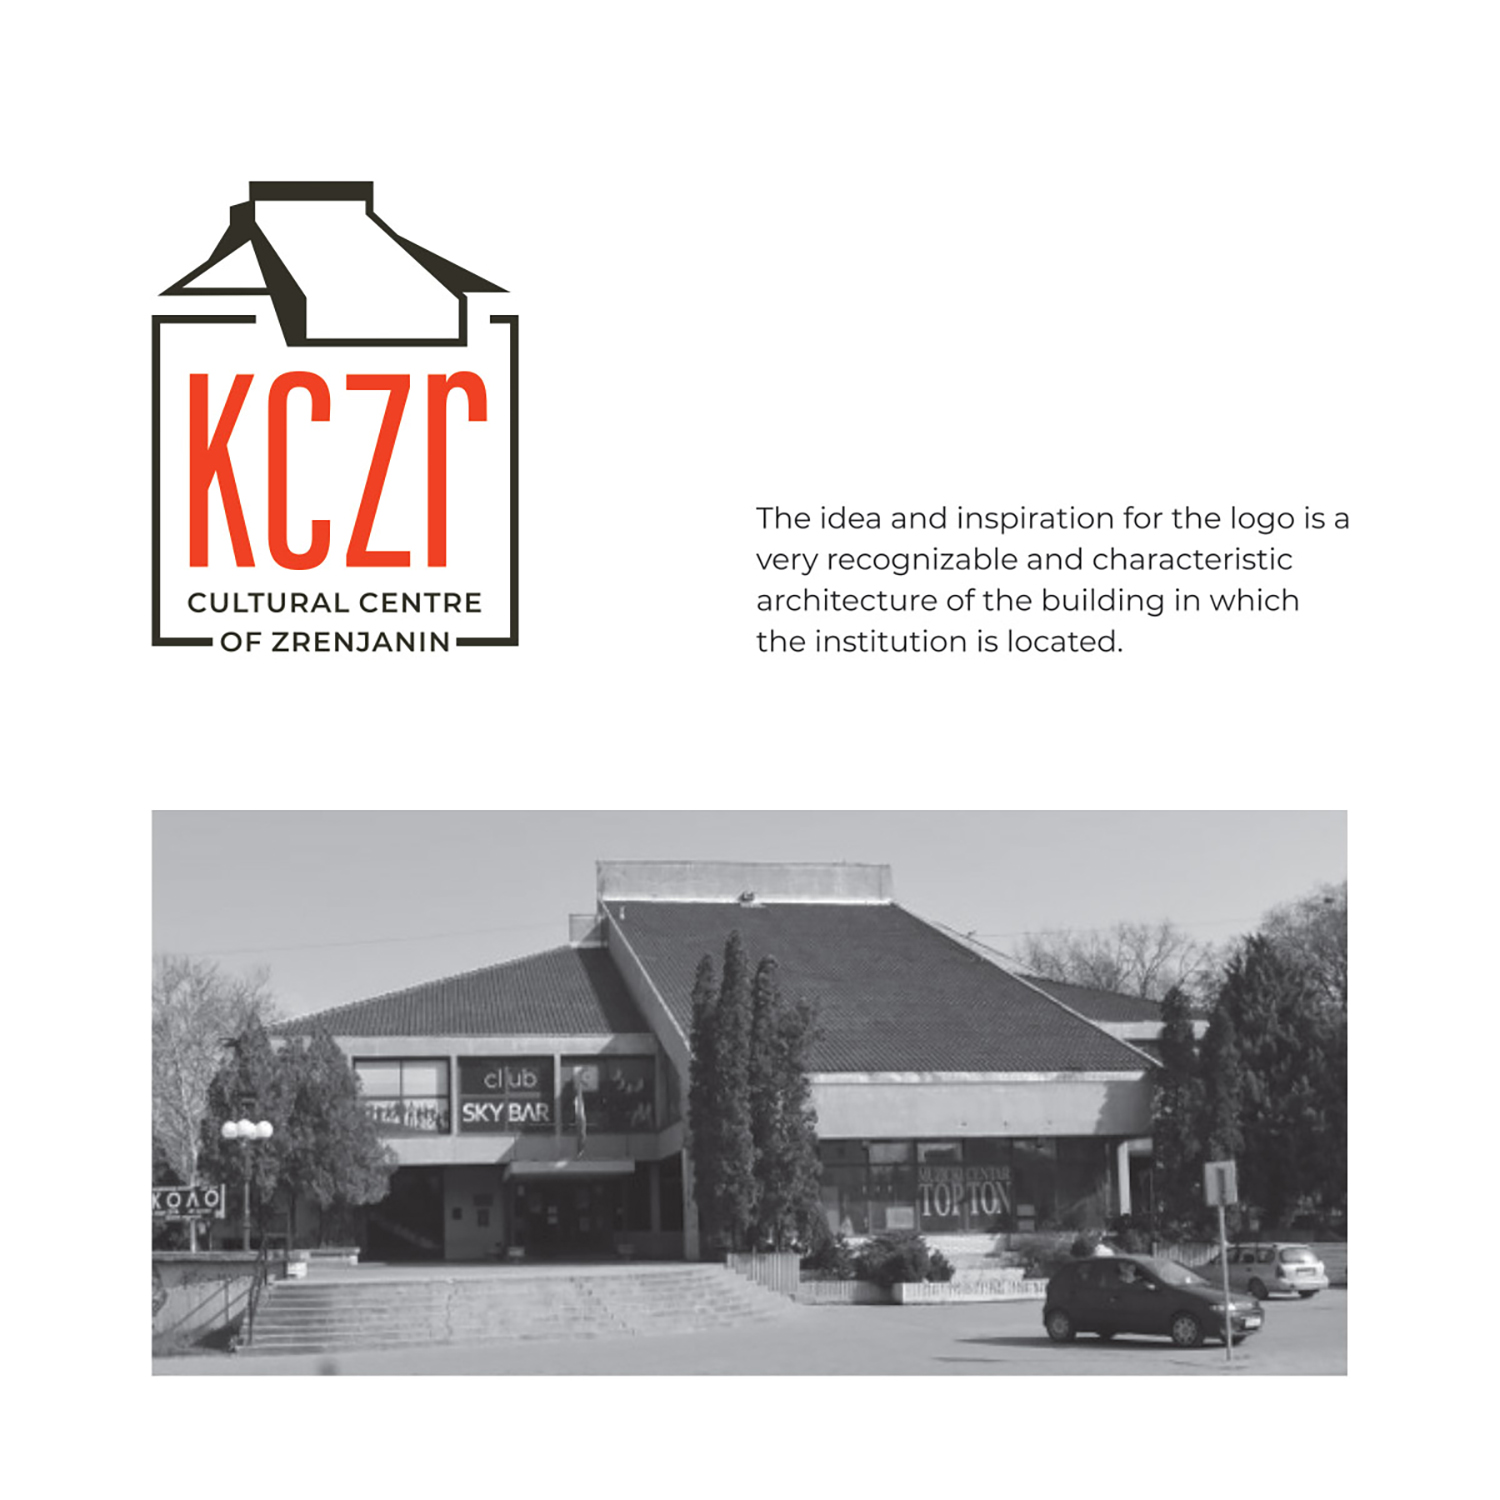 KCZR concept